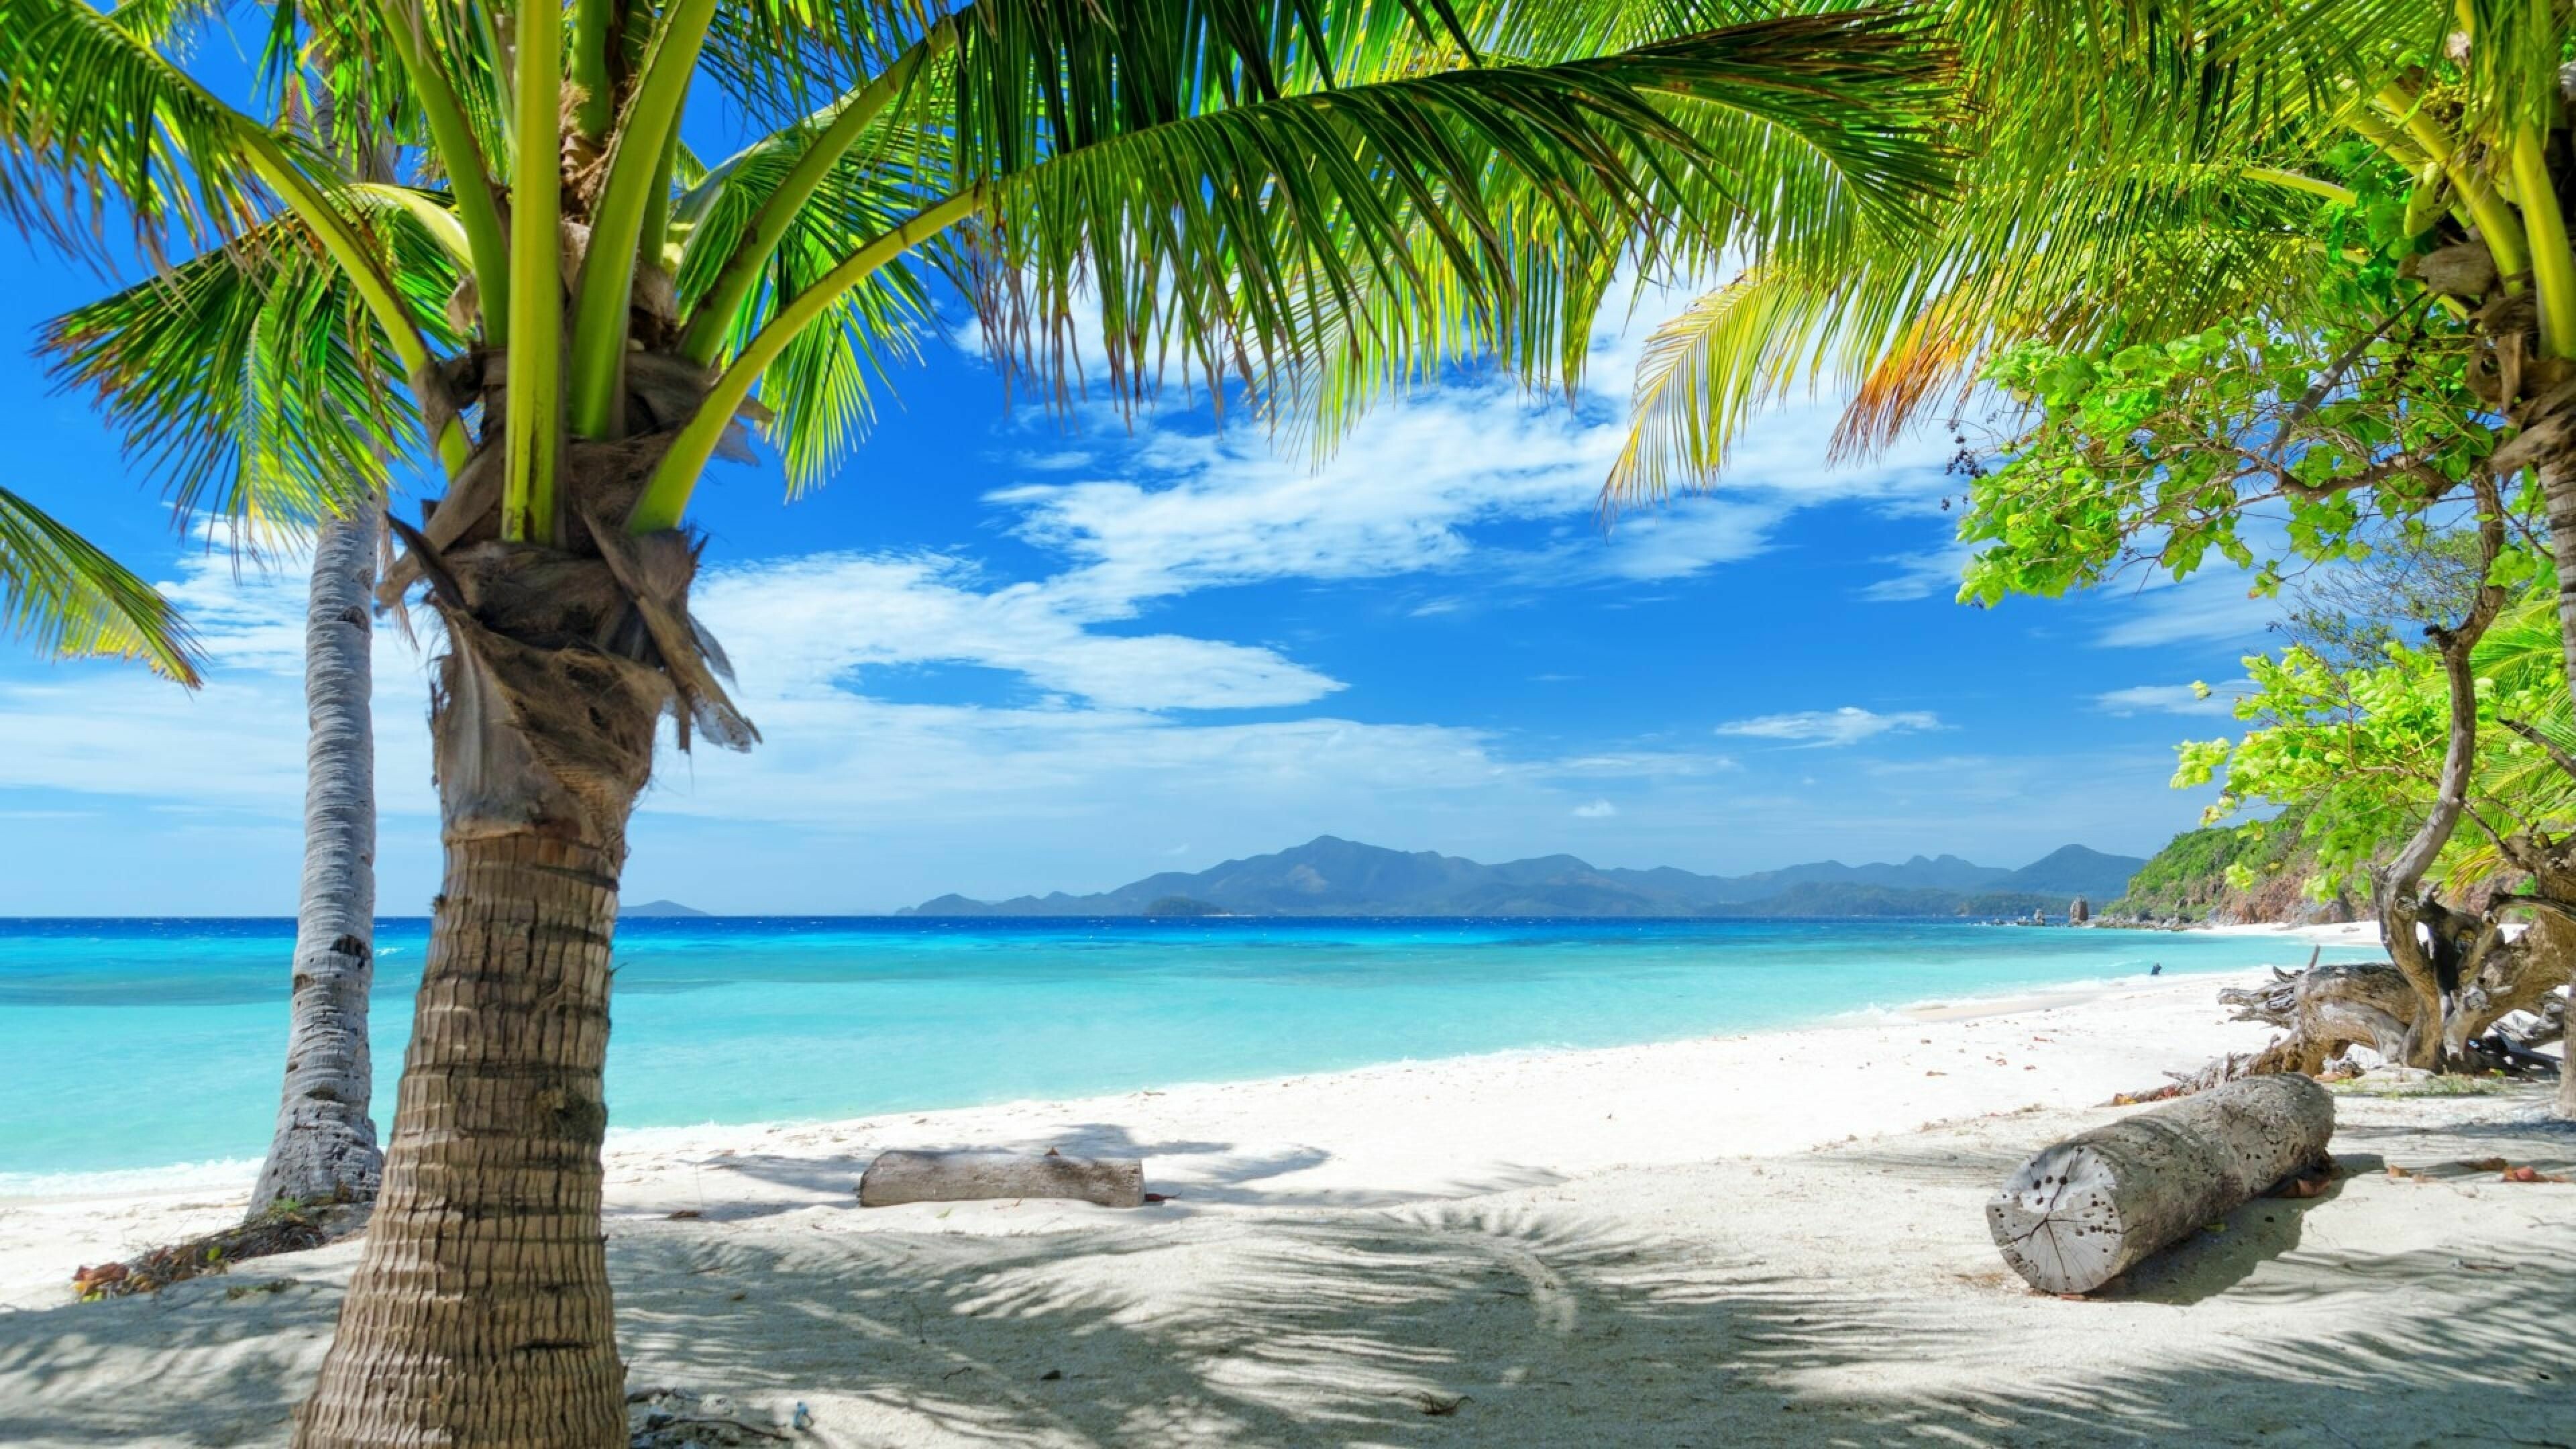 Beach: Landscape, Palm trees, White sand, Seashore, Coast, Island. 3840x2160 4K Wallpaper.